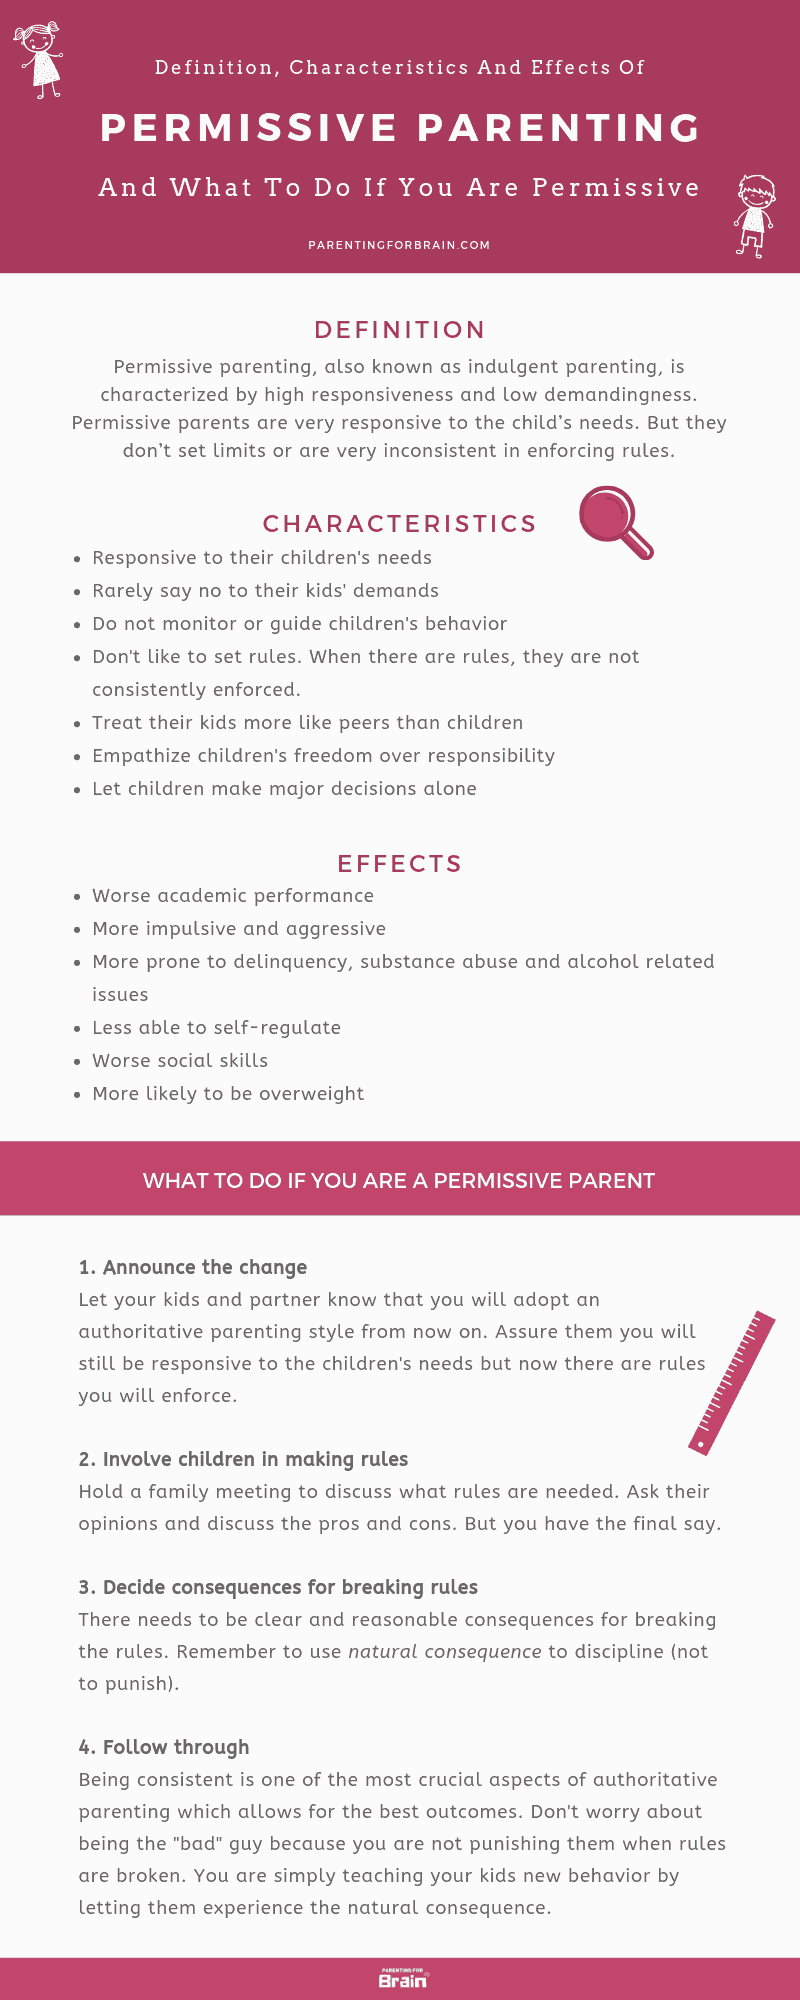 Permissive parenting infographic with indulgent parenting definition